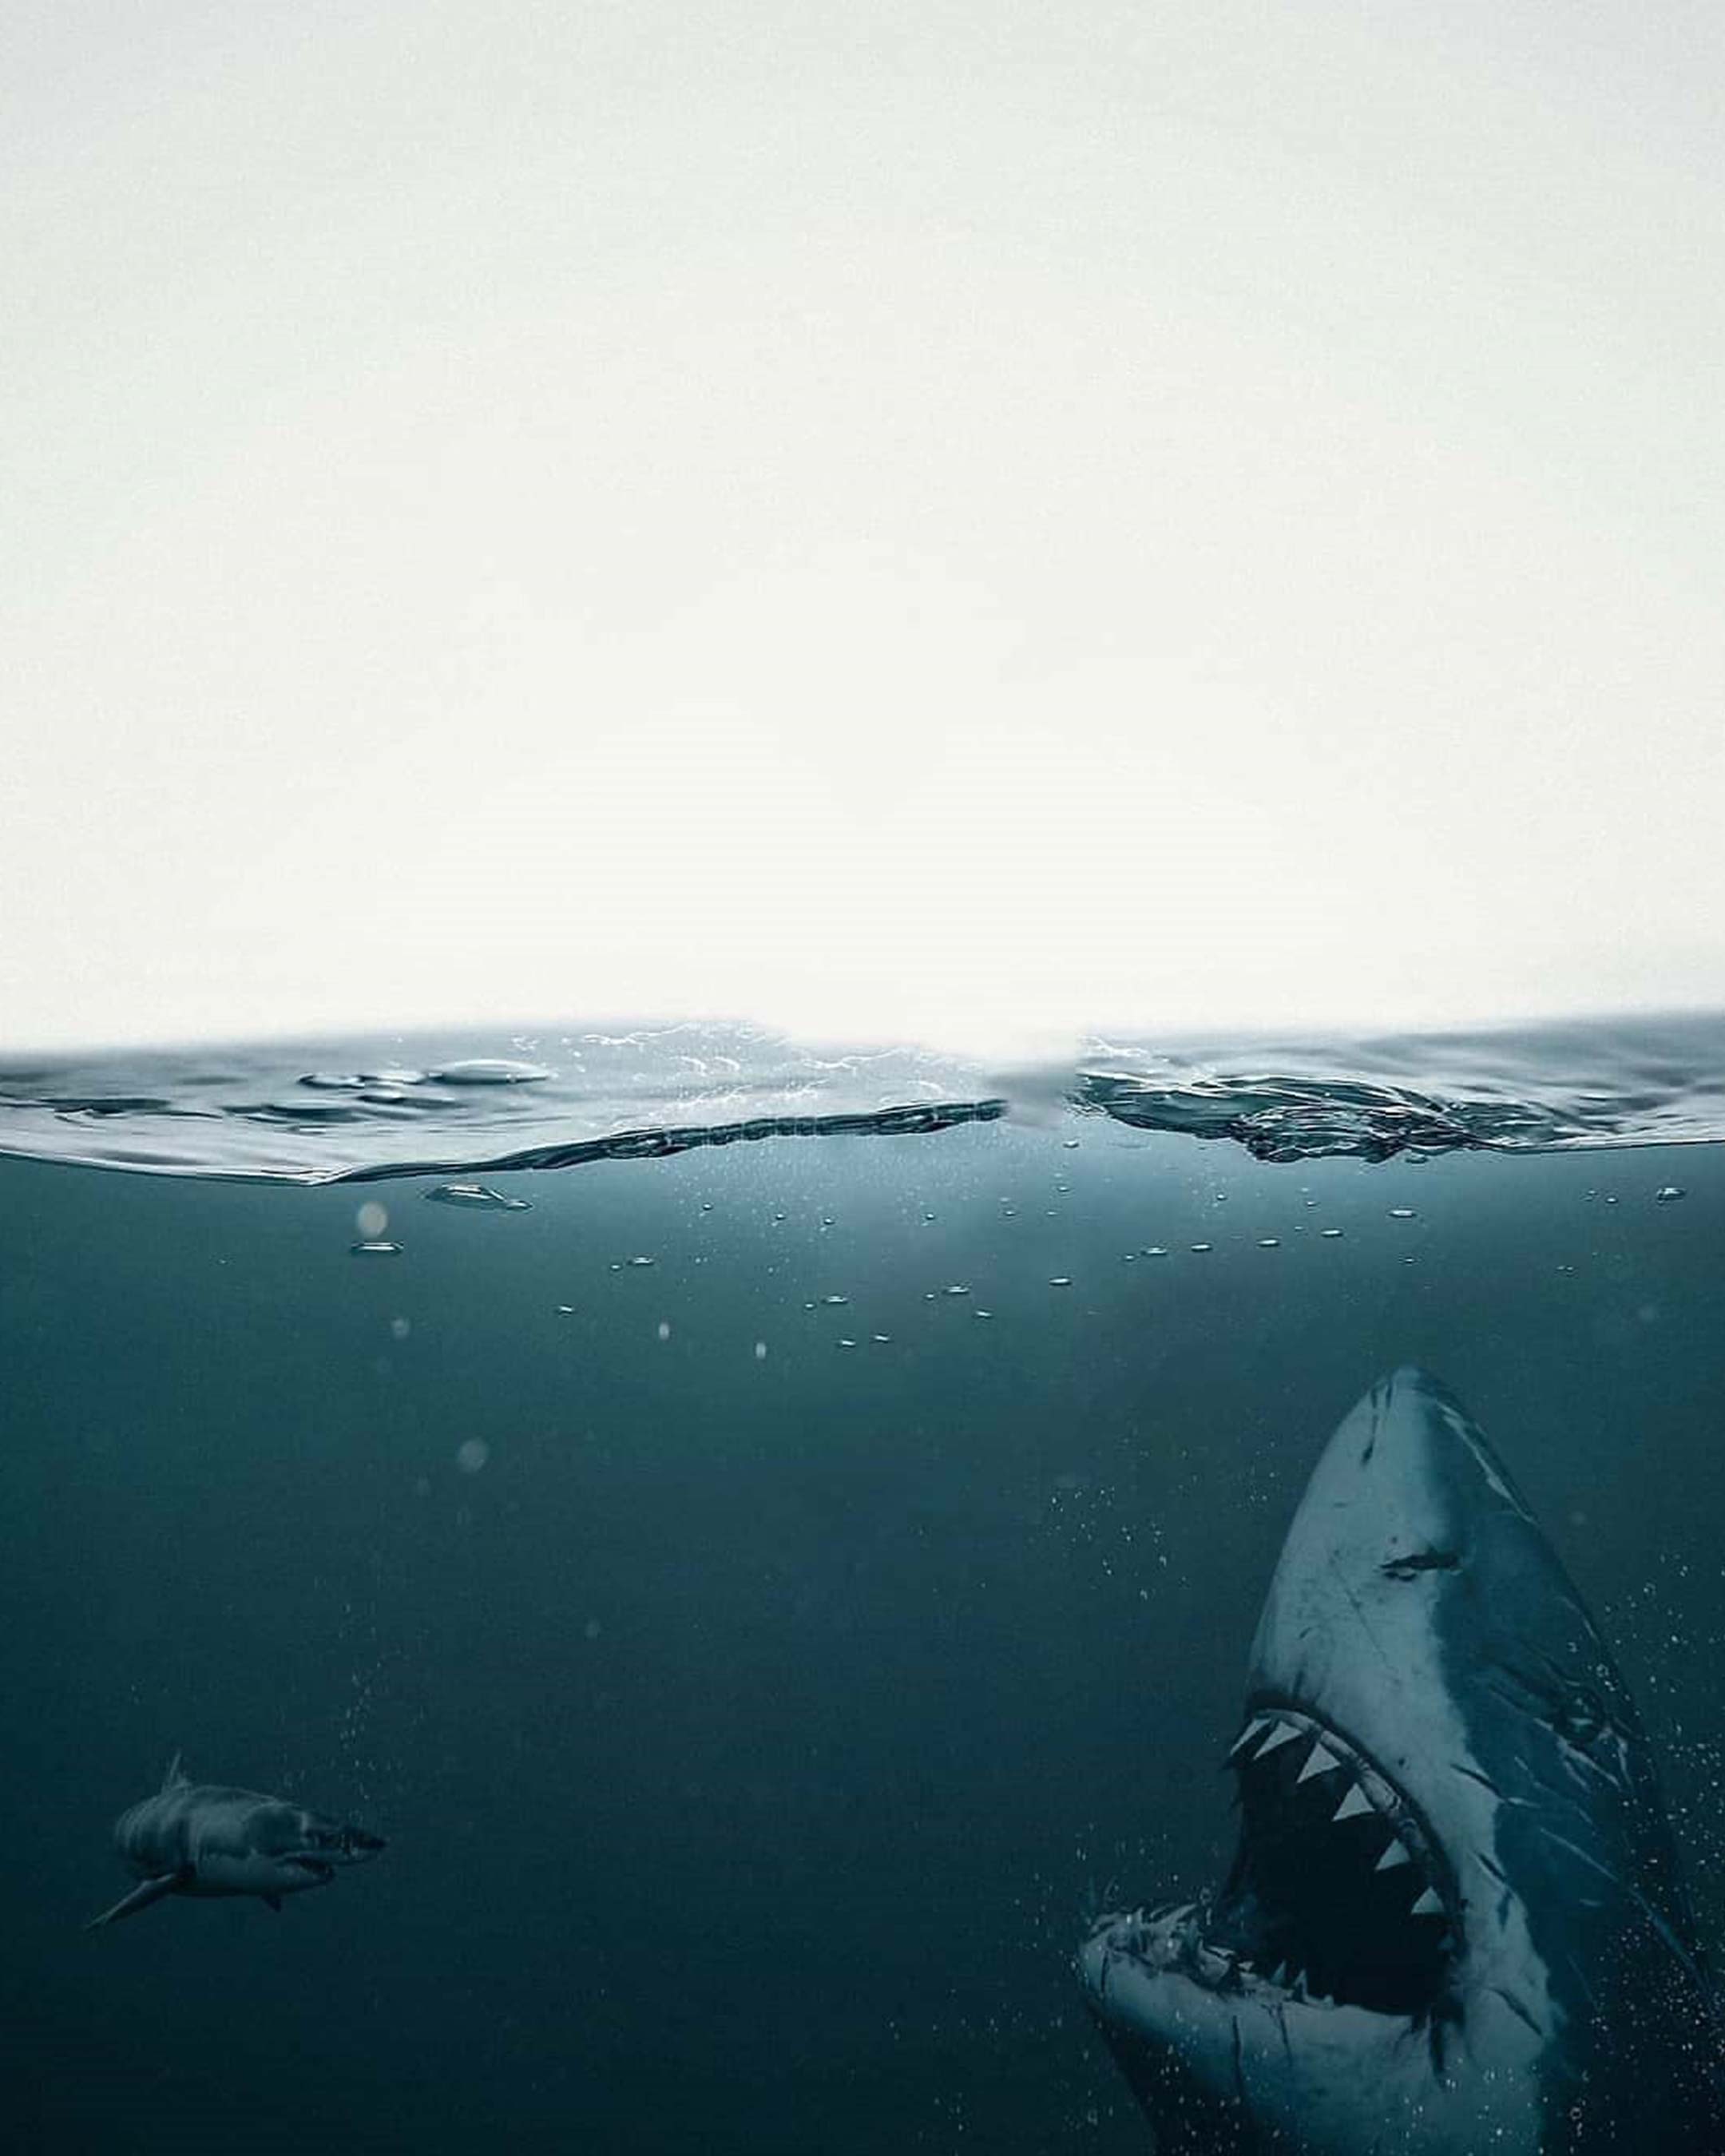 Underwater Shark PicsArt Background Free Stock Image